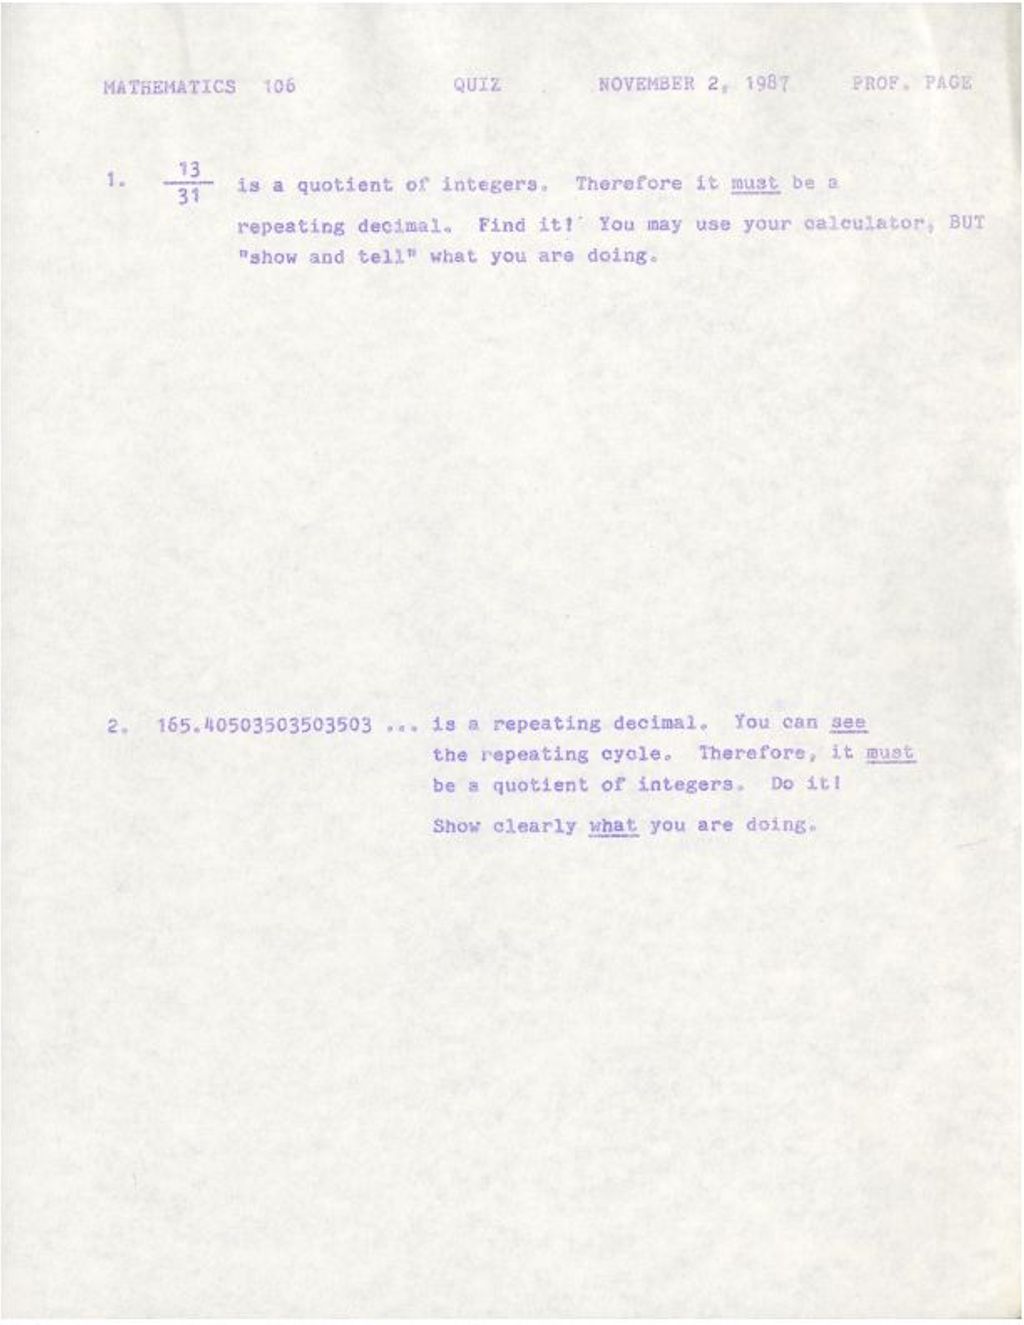 Math 106 Quiz (1987) 13/31 is a quotient of an integer